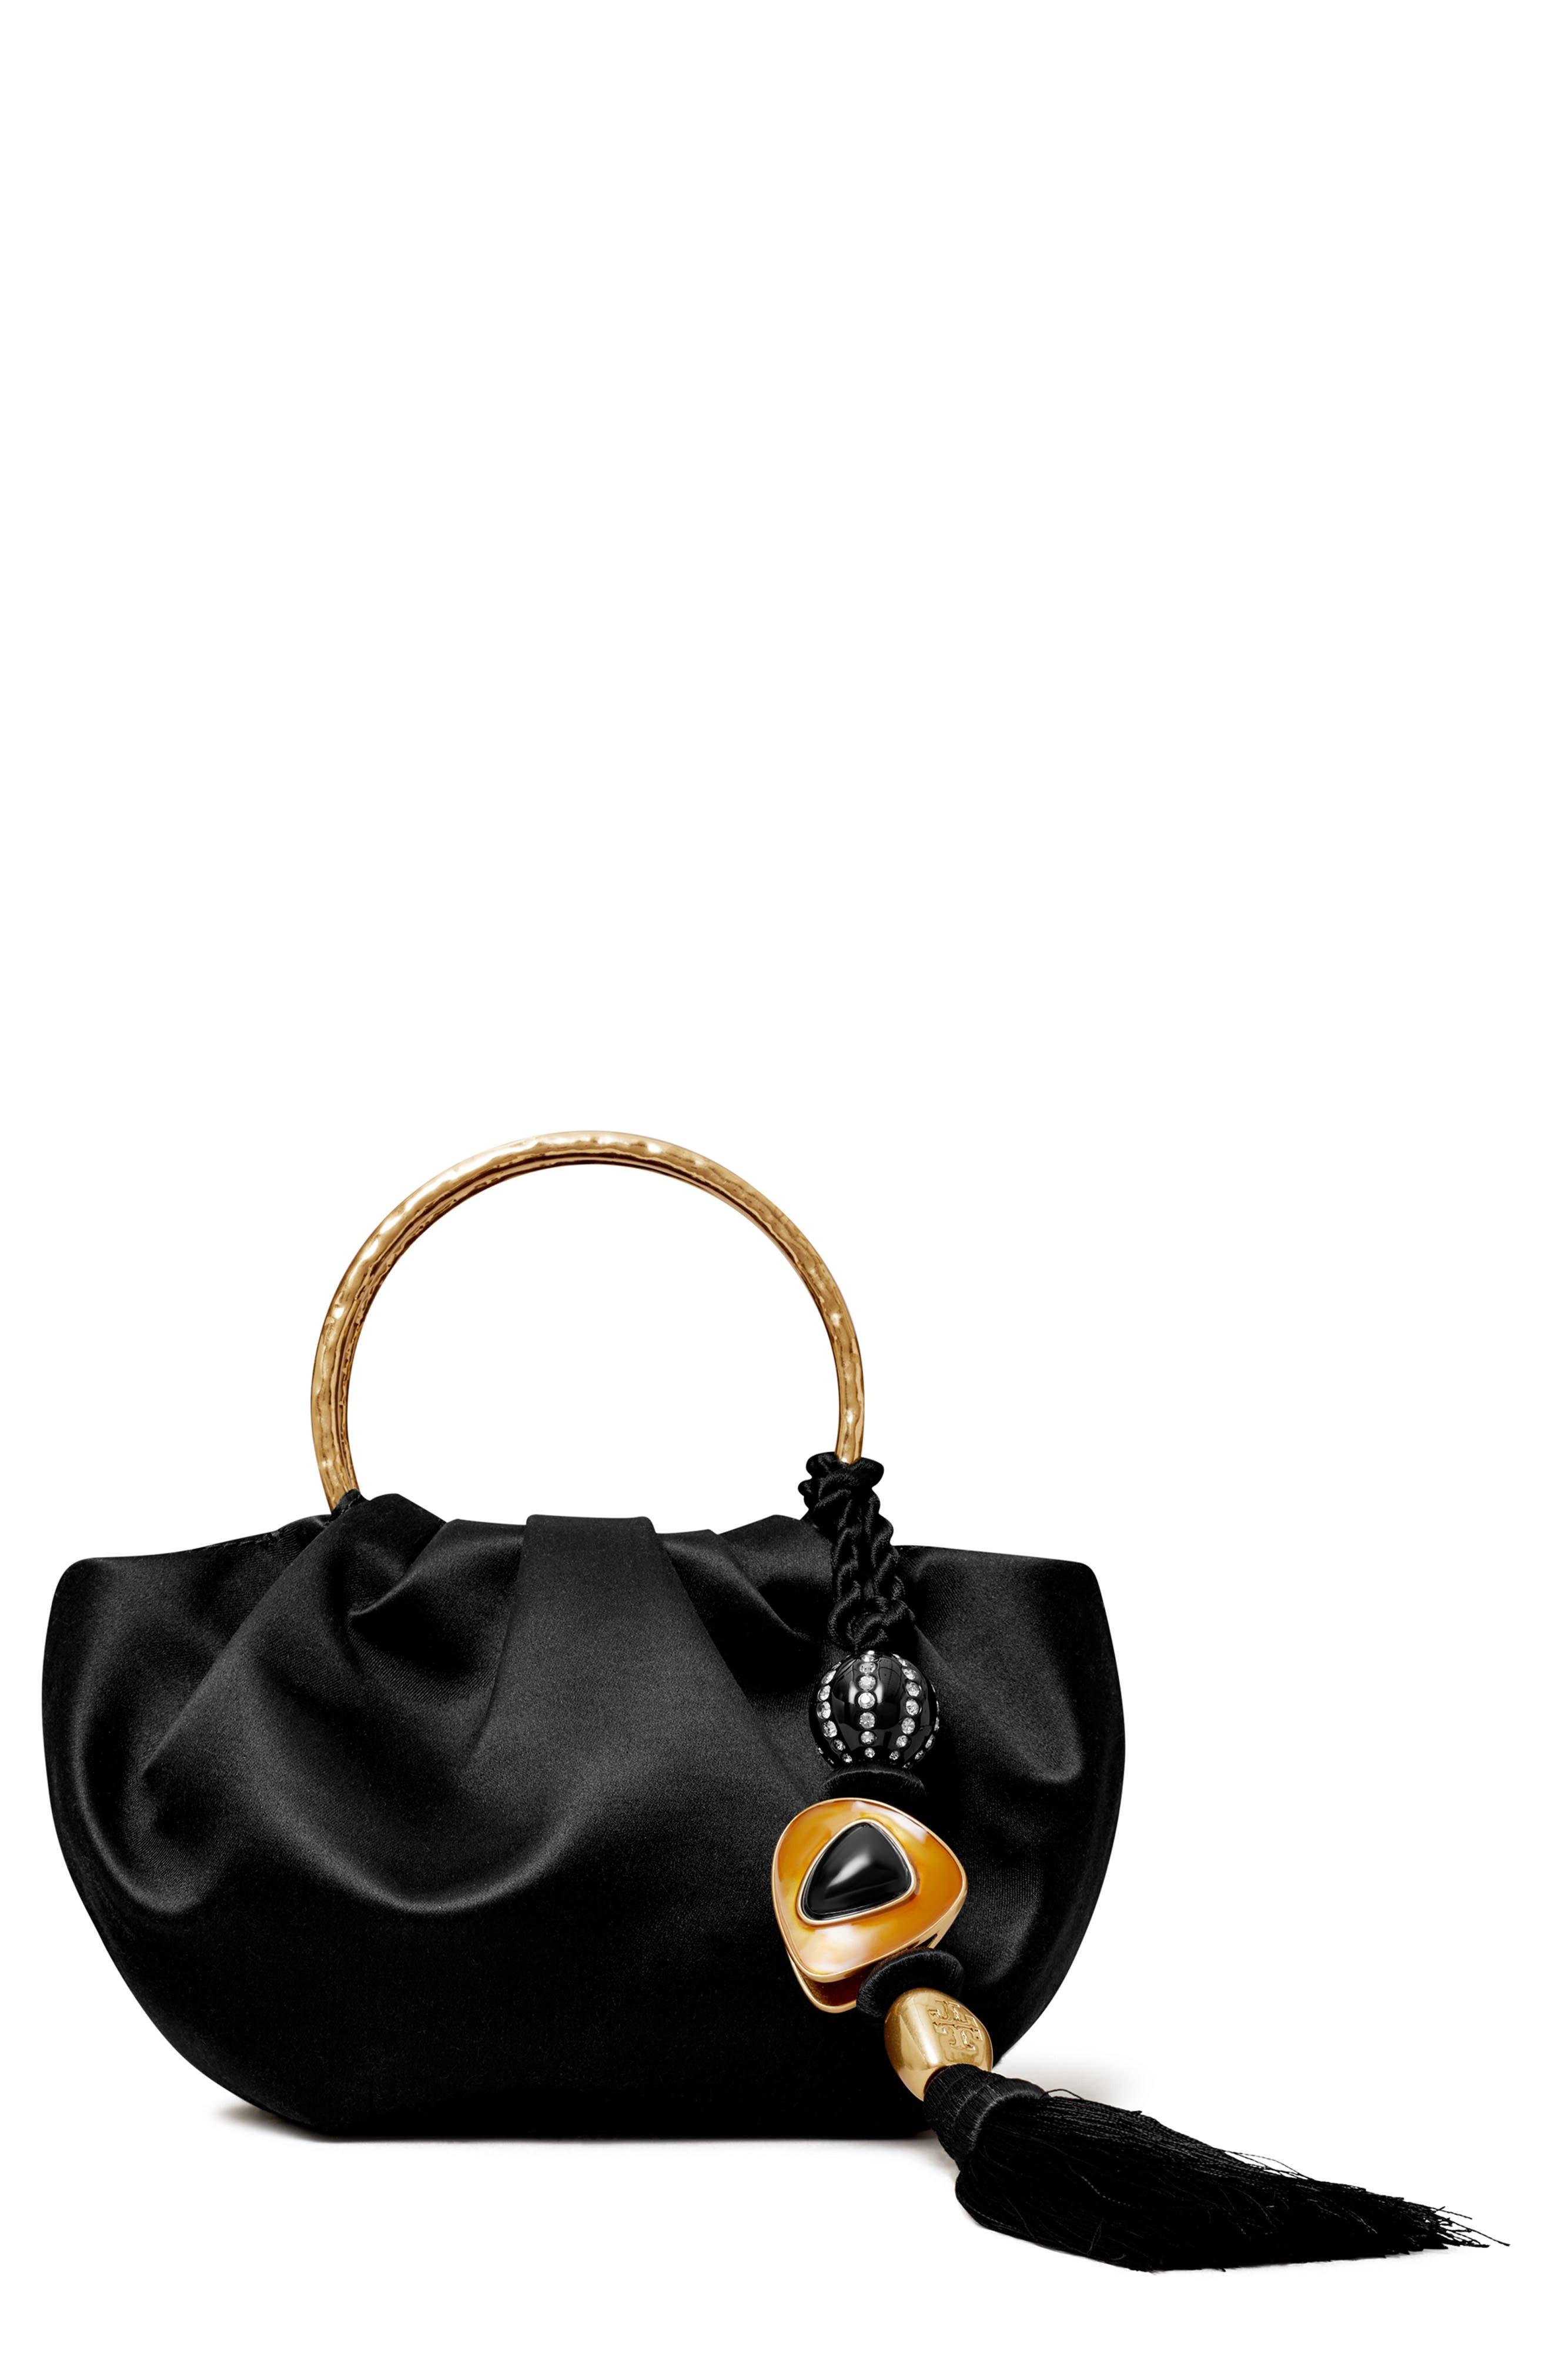 Vintage Black Satin Clutch. Coblentz Evening Bag. Saks Fifth Avenue Pu